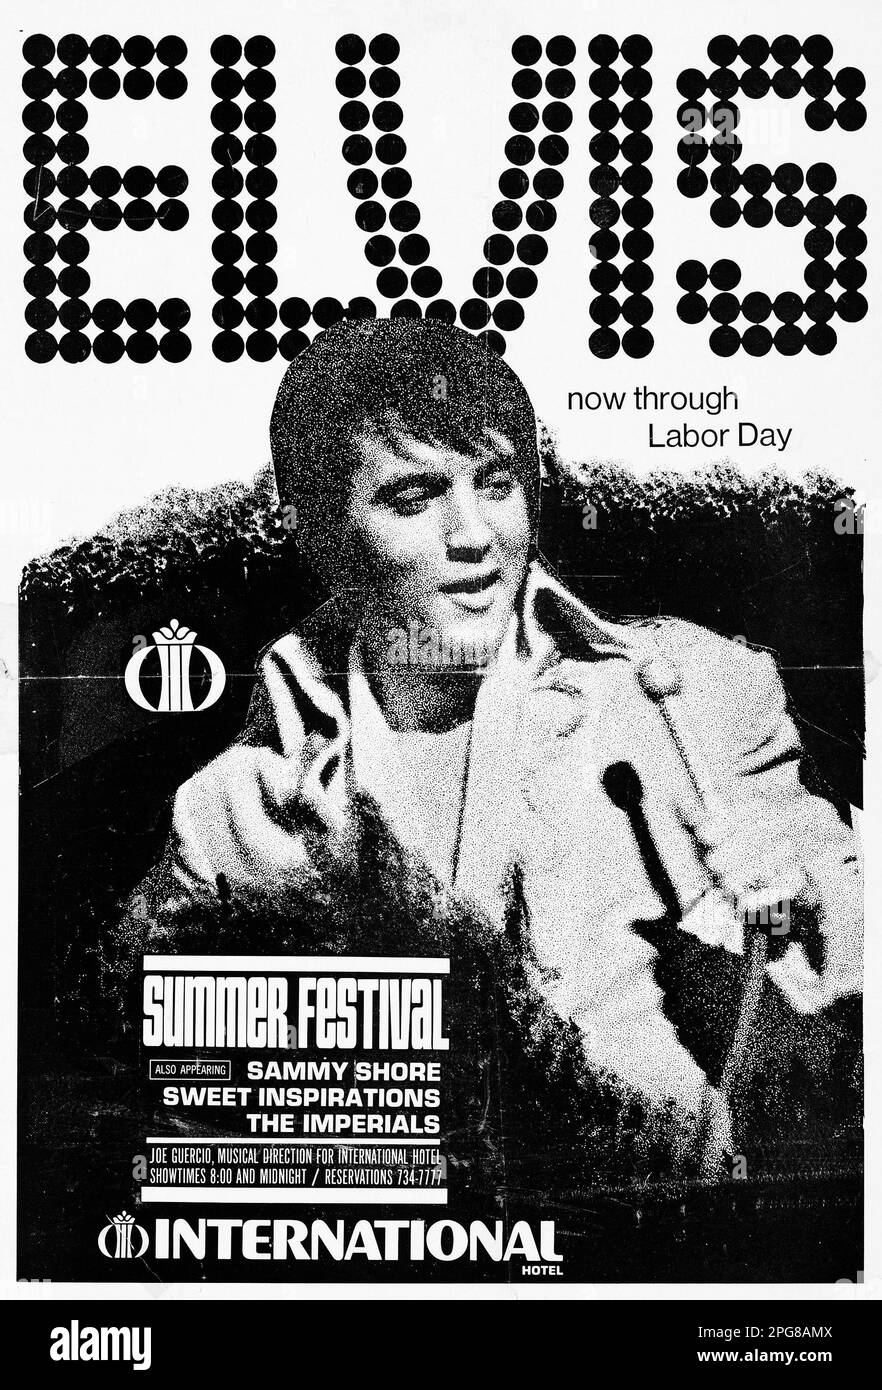 Elvis Presley, Sammy Shore, Sweet inspirations, The Imperials - 1970 Las Vegas Summer Festival International Hotel - Poster de concerts d'époque Banque D'Images